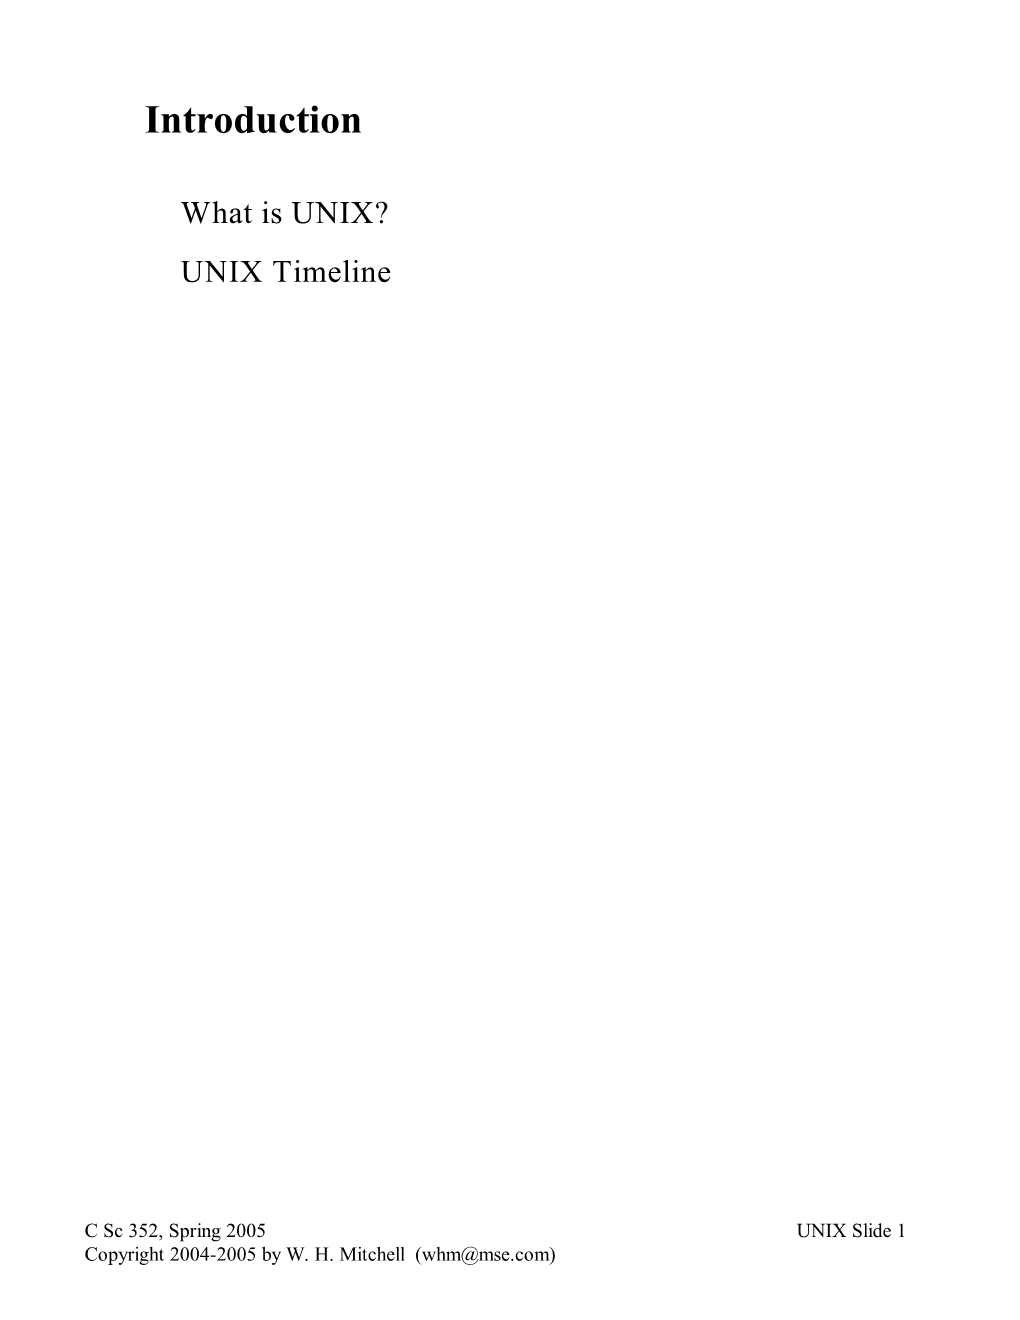 UNIX Slide 1 Copyright 2004-2005 by W